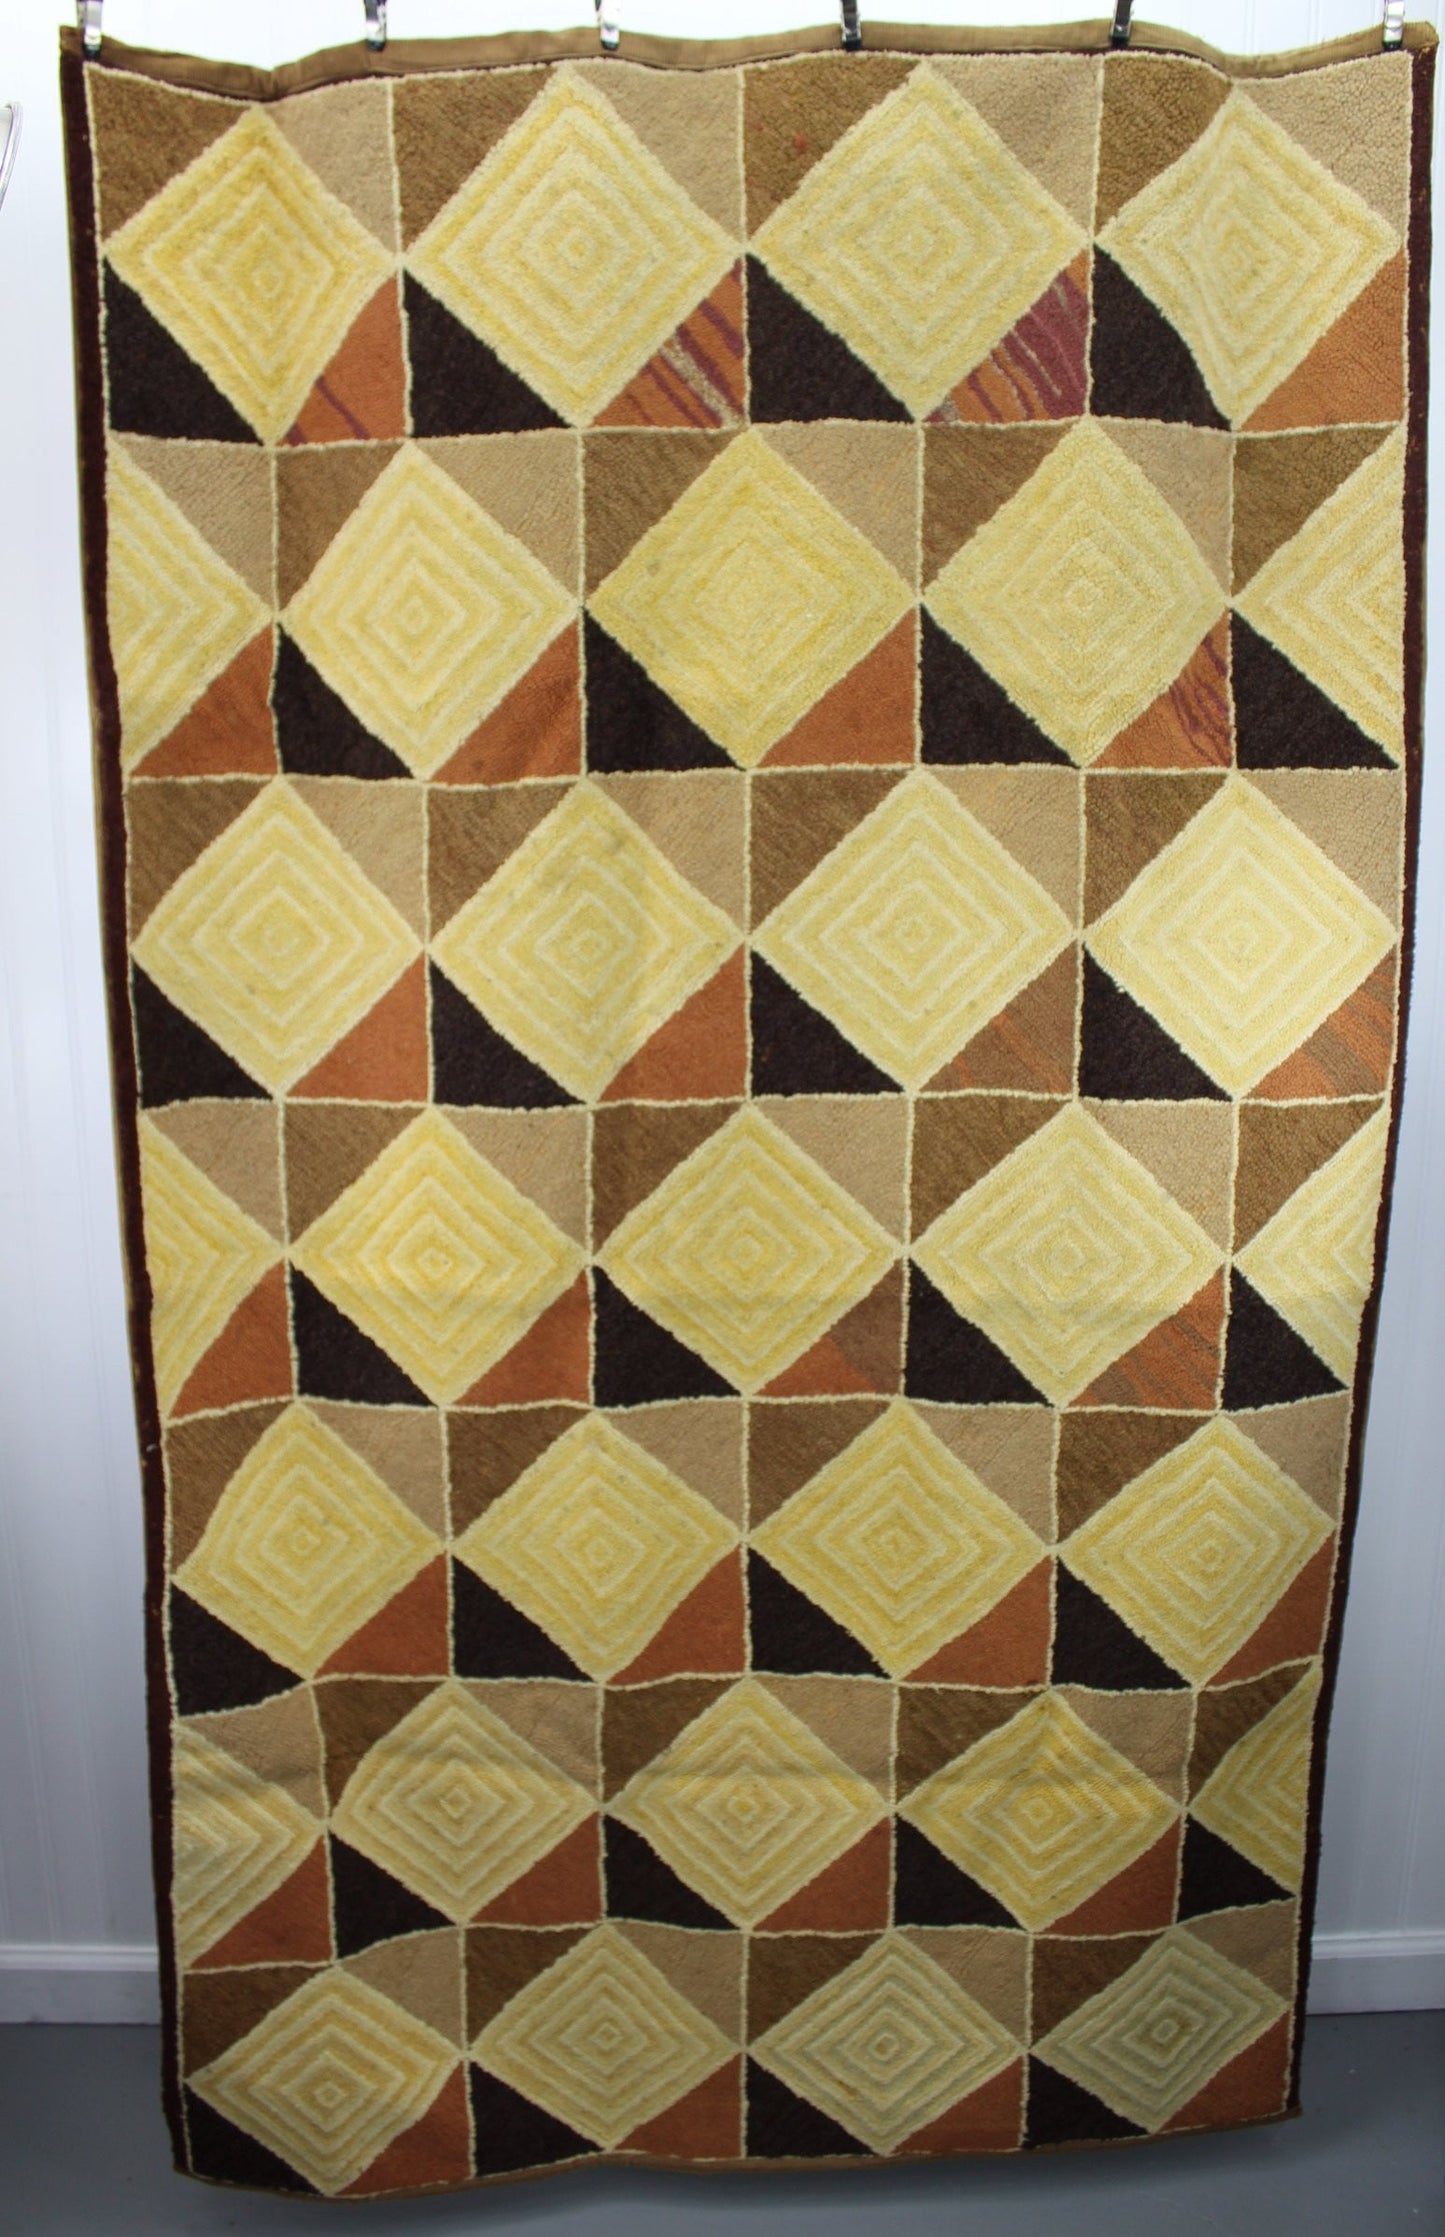 Vintage 1950s Hand Hooked Wool Rug - Tumbling Block Pattern - Mid Century Provenance great with teak furniture